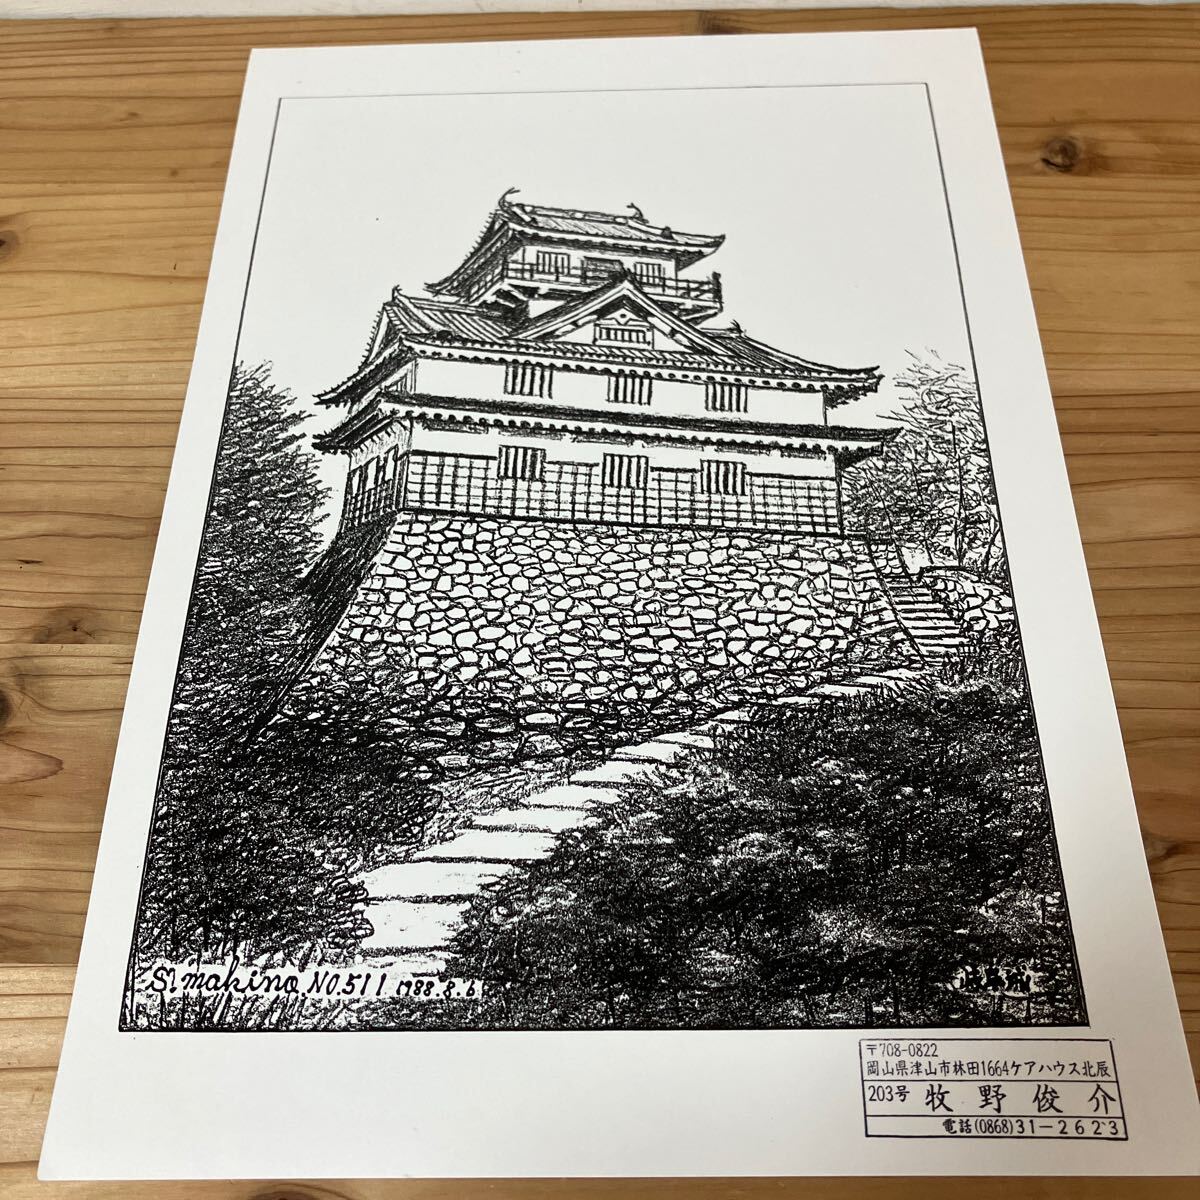 Mao H0305 [Makino Shunsuke Gifu Castle No. 511 Print of pencil drawing] 1988, Artwork, Painting, Pencil drawing, Charcoal drawing